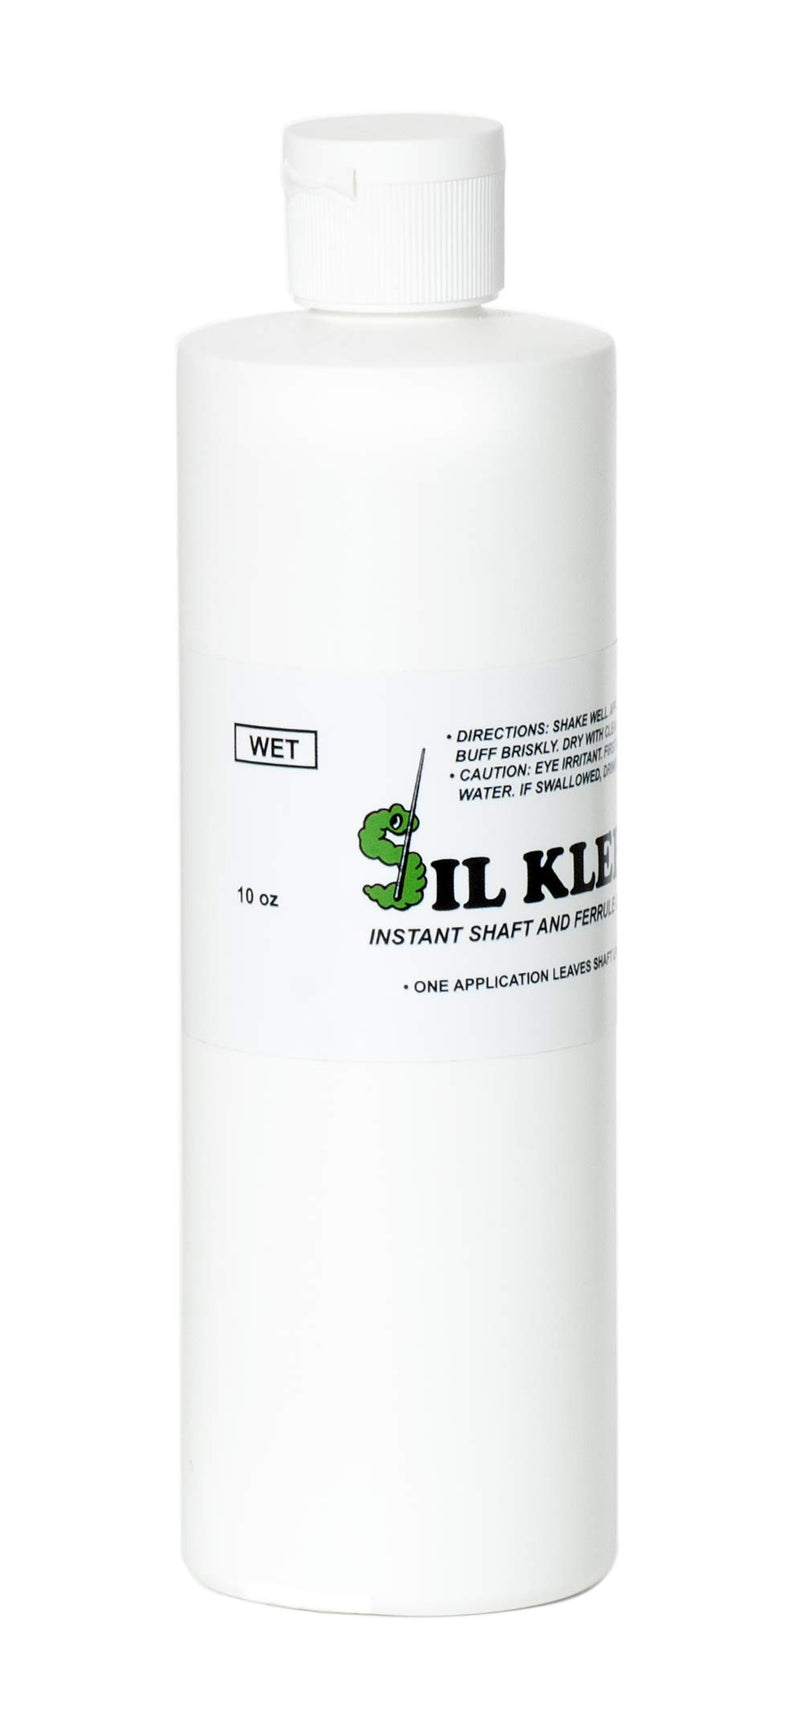 [AUSTRALIA] - Cue Silk SIL Kleen Pool Cue Shaft and Ferrule Cleaner 10 oz Bottle 